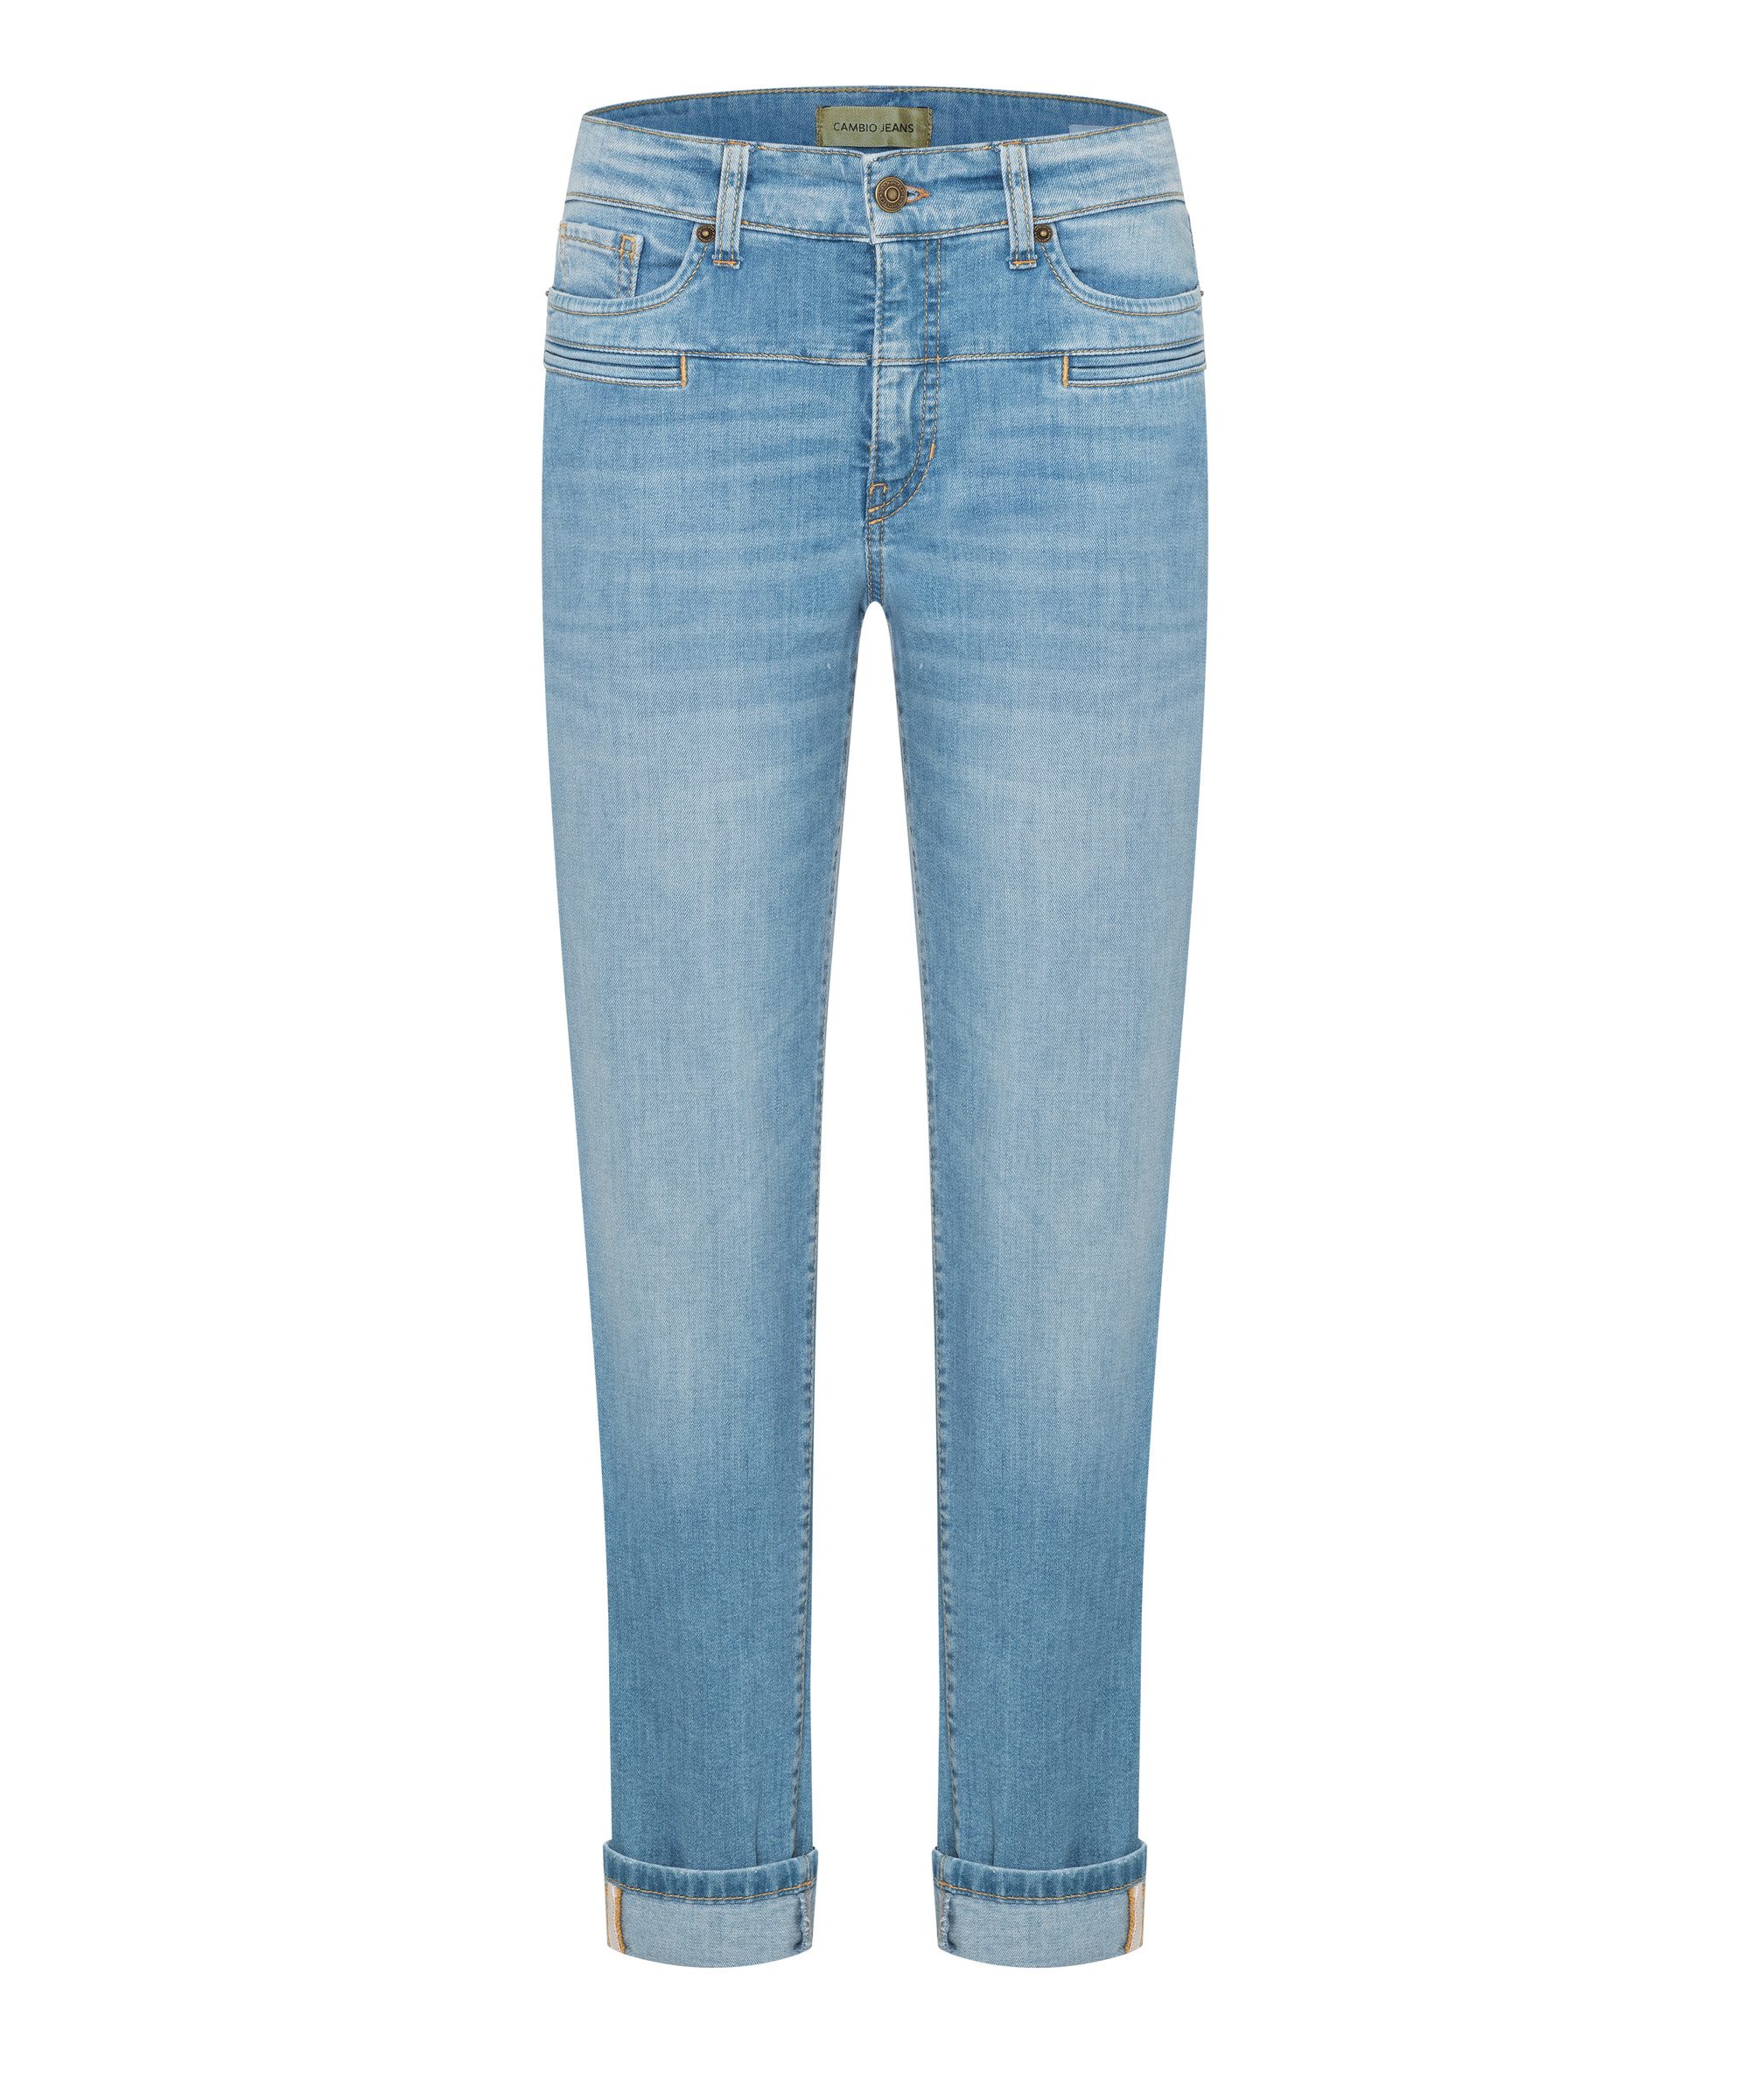 Cambio 5-Pocket-Jeans Pearlie